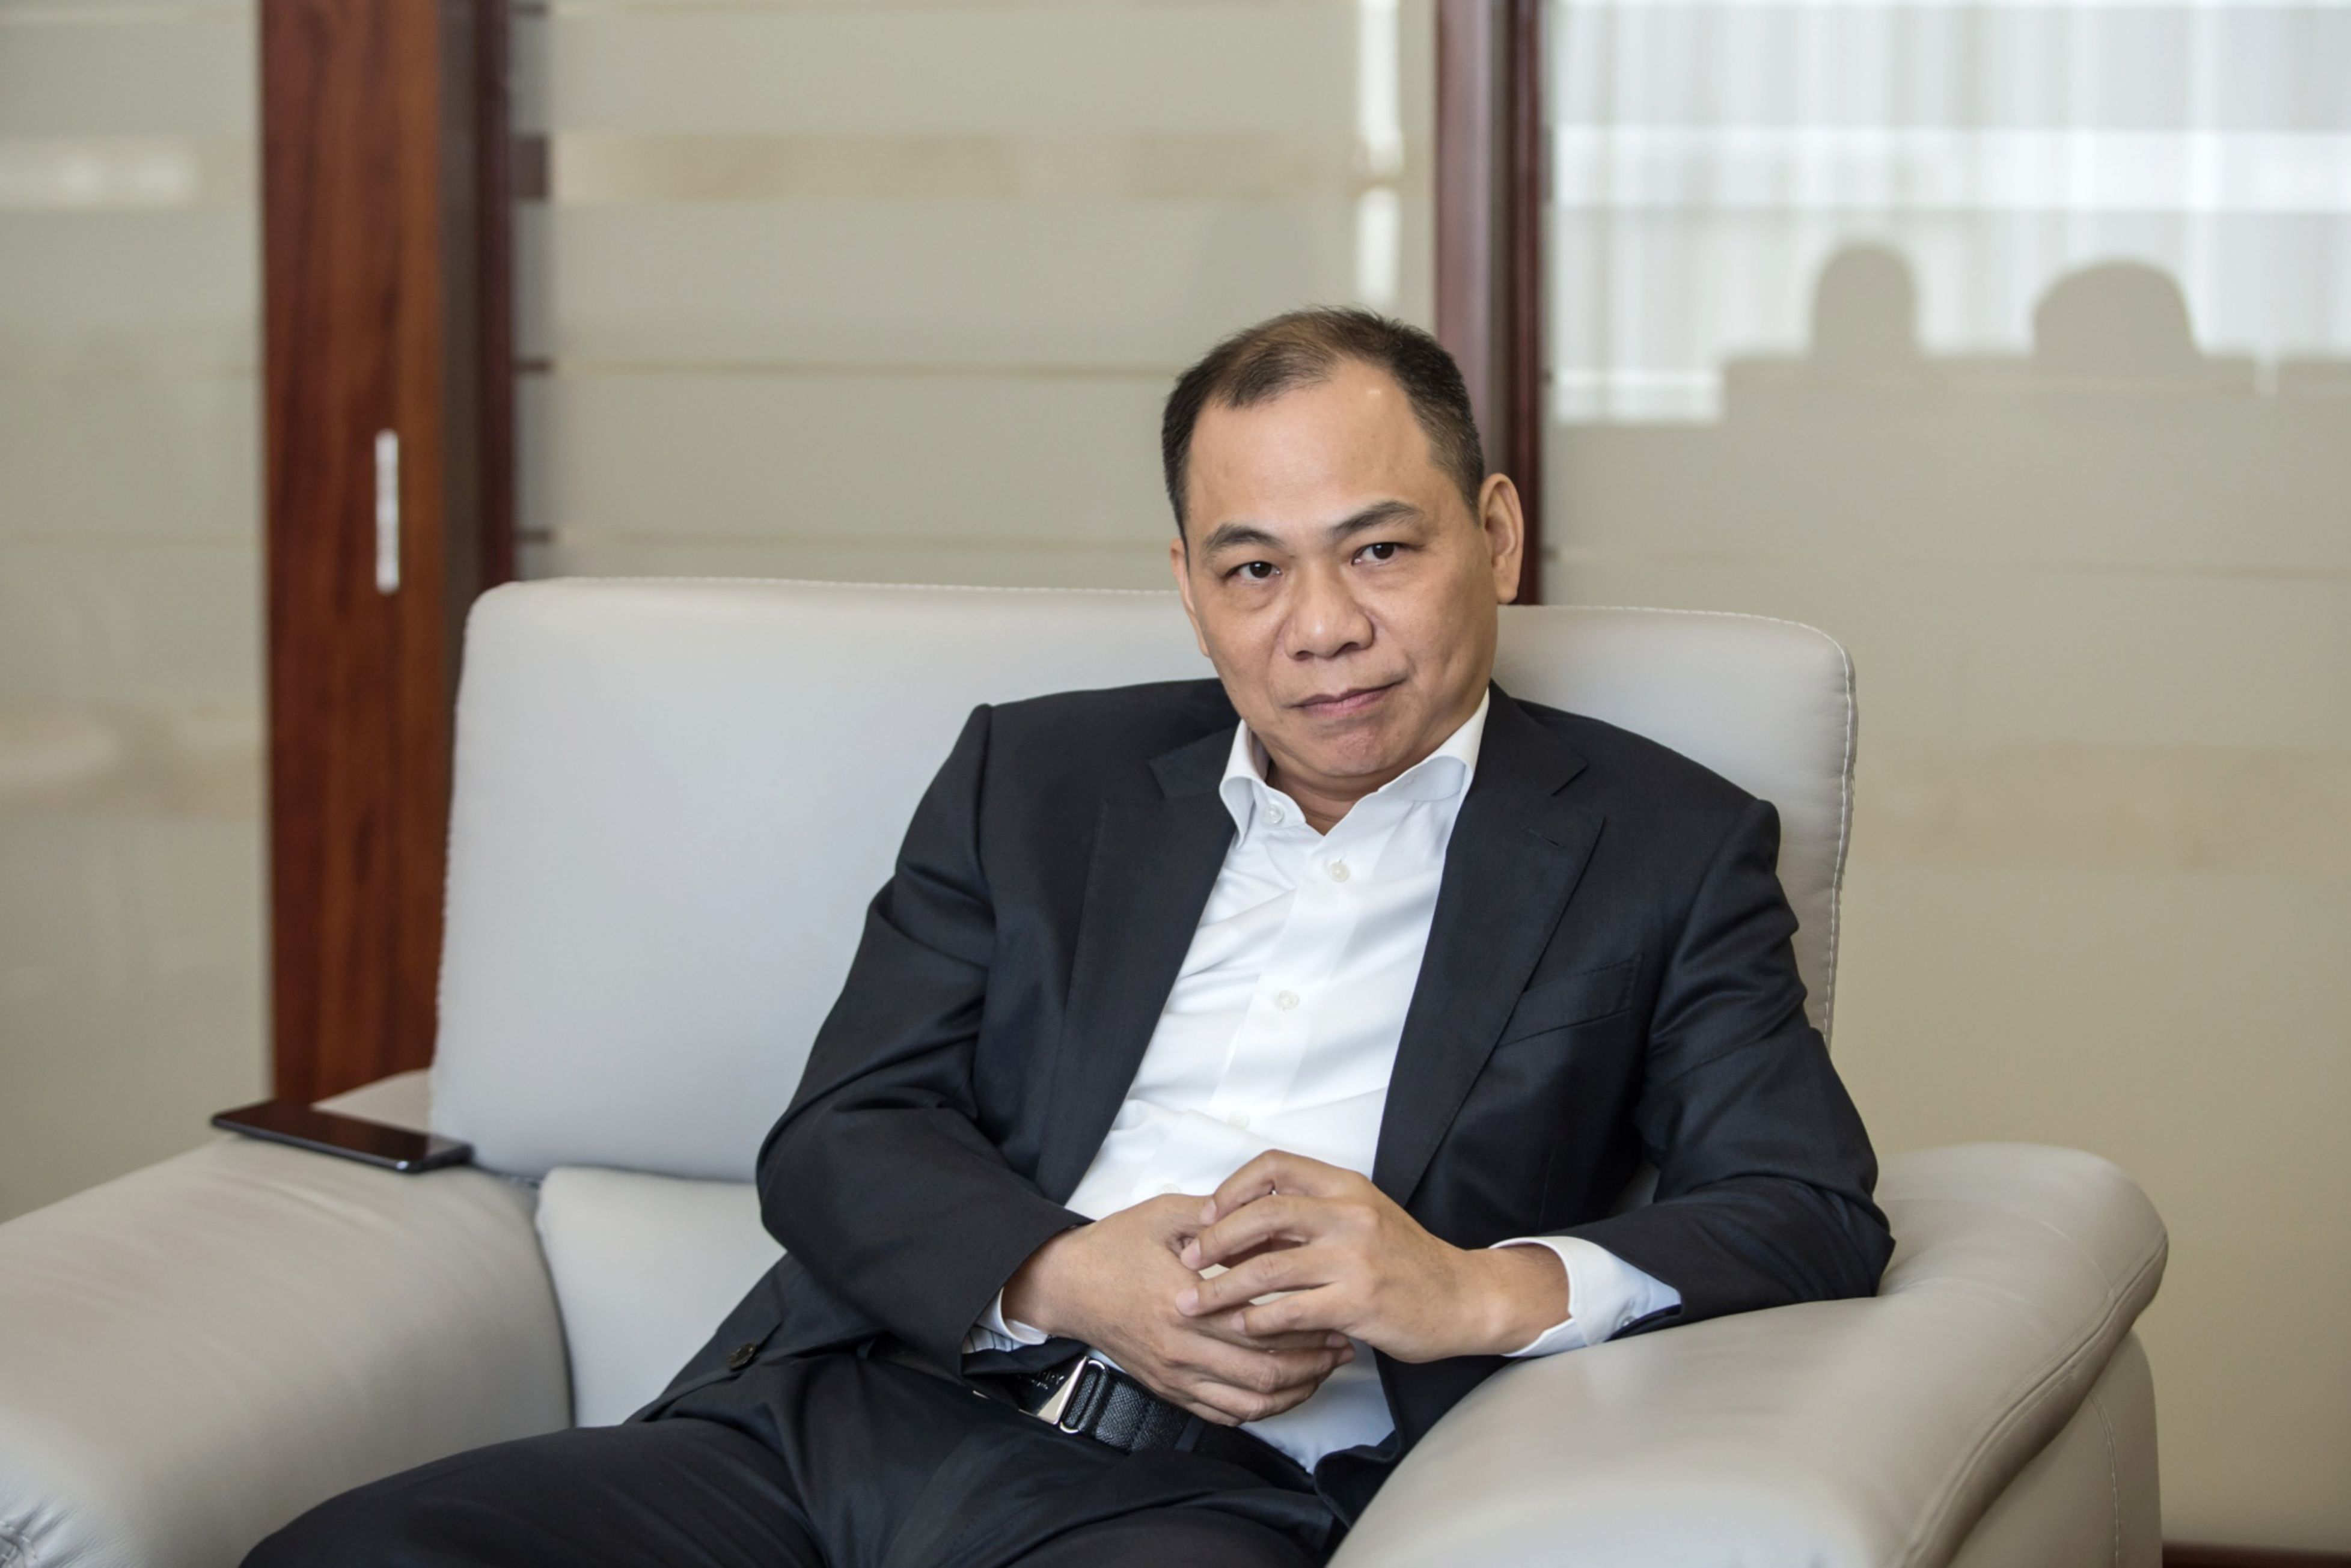 Pham Nhat Vuong, chairman of Vingroup JSC, listens during an interview in Hanoi, Vietnam, on Thursday, Dec. 5, 2019. Photographer: Yen Duong/Bloomberg